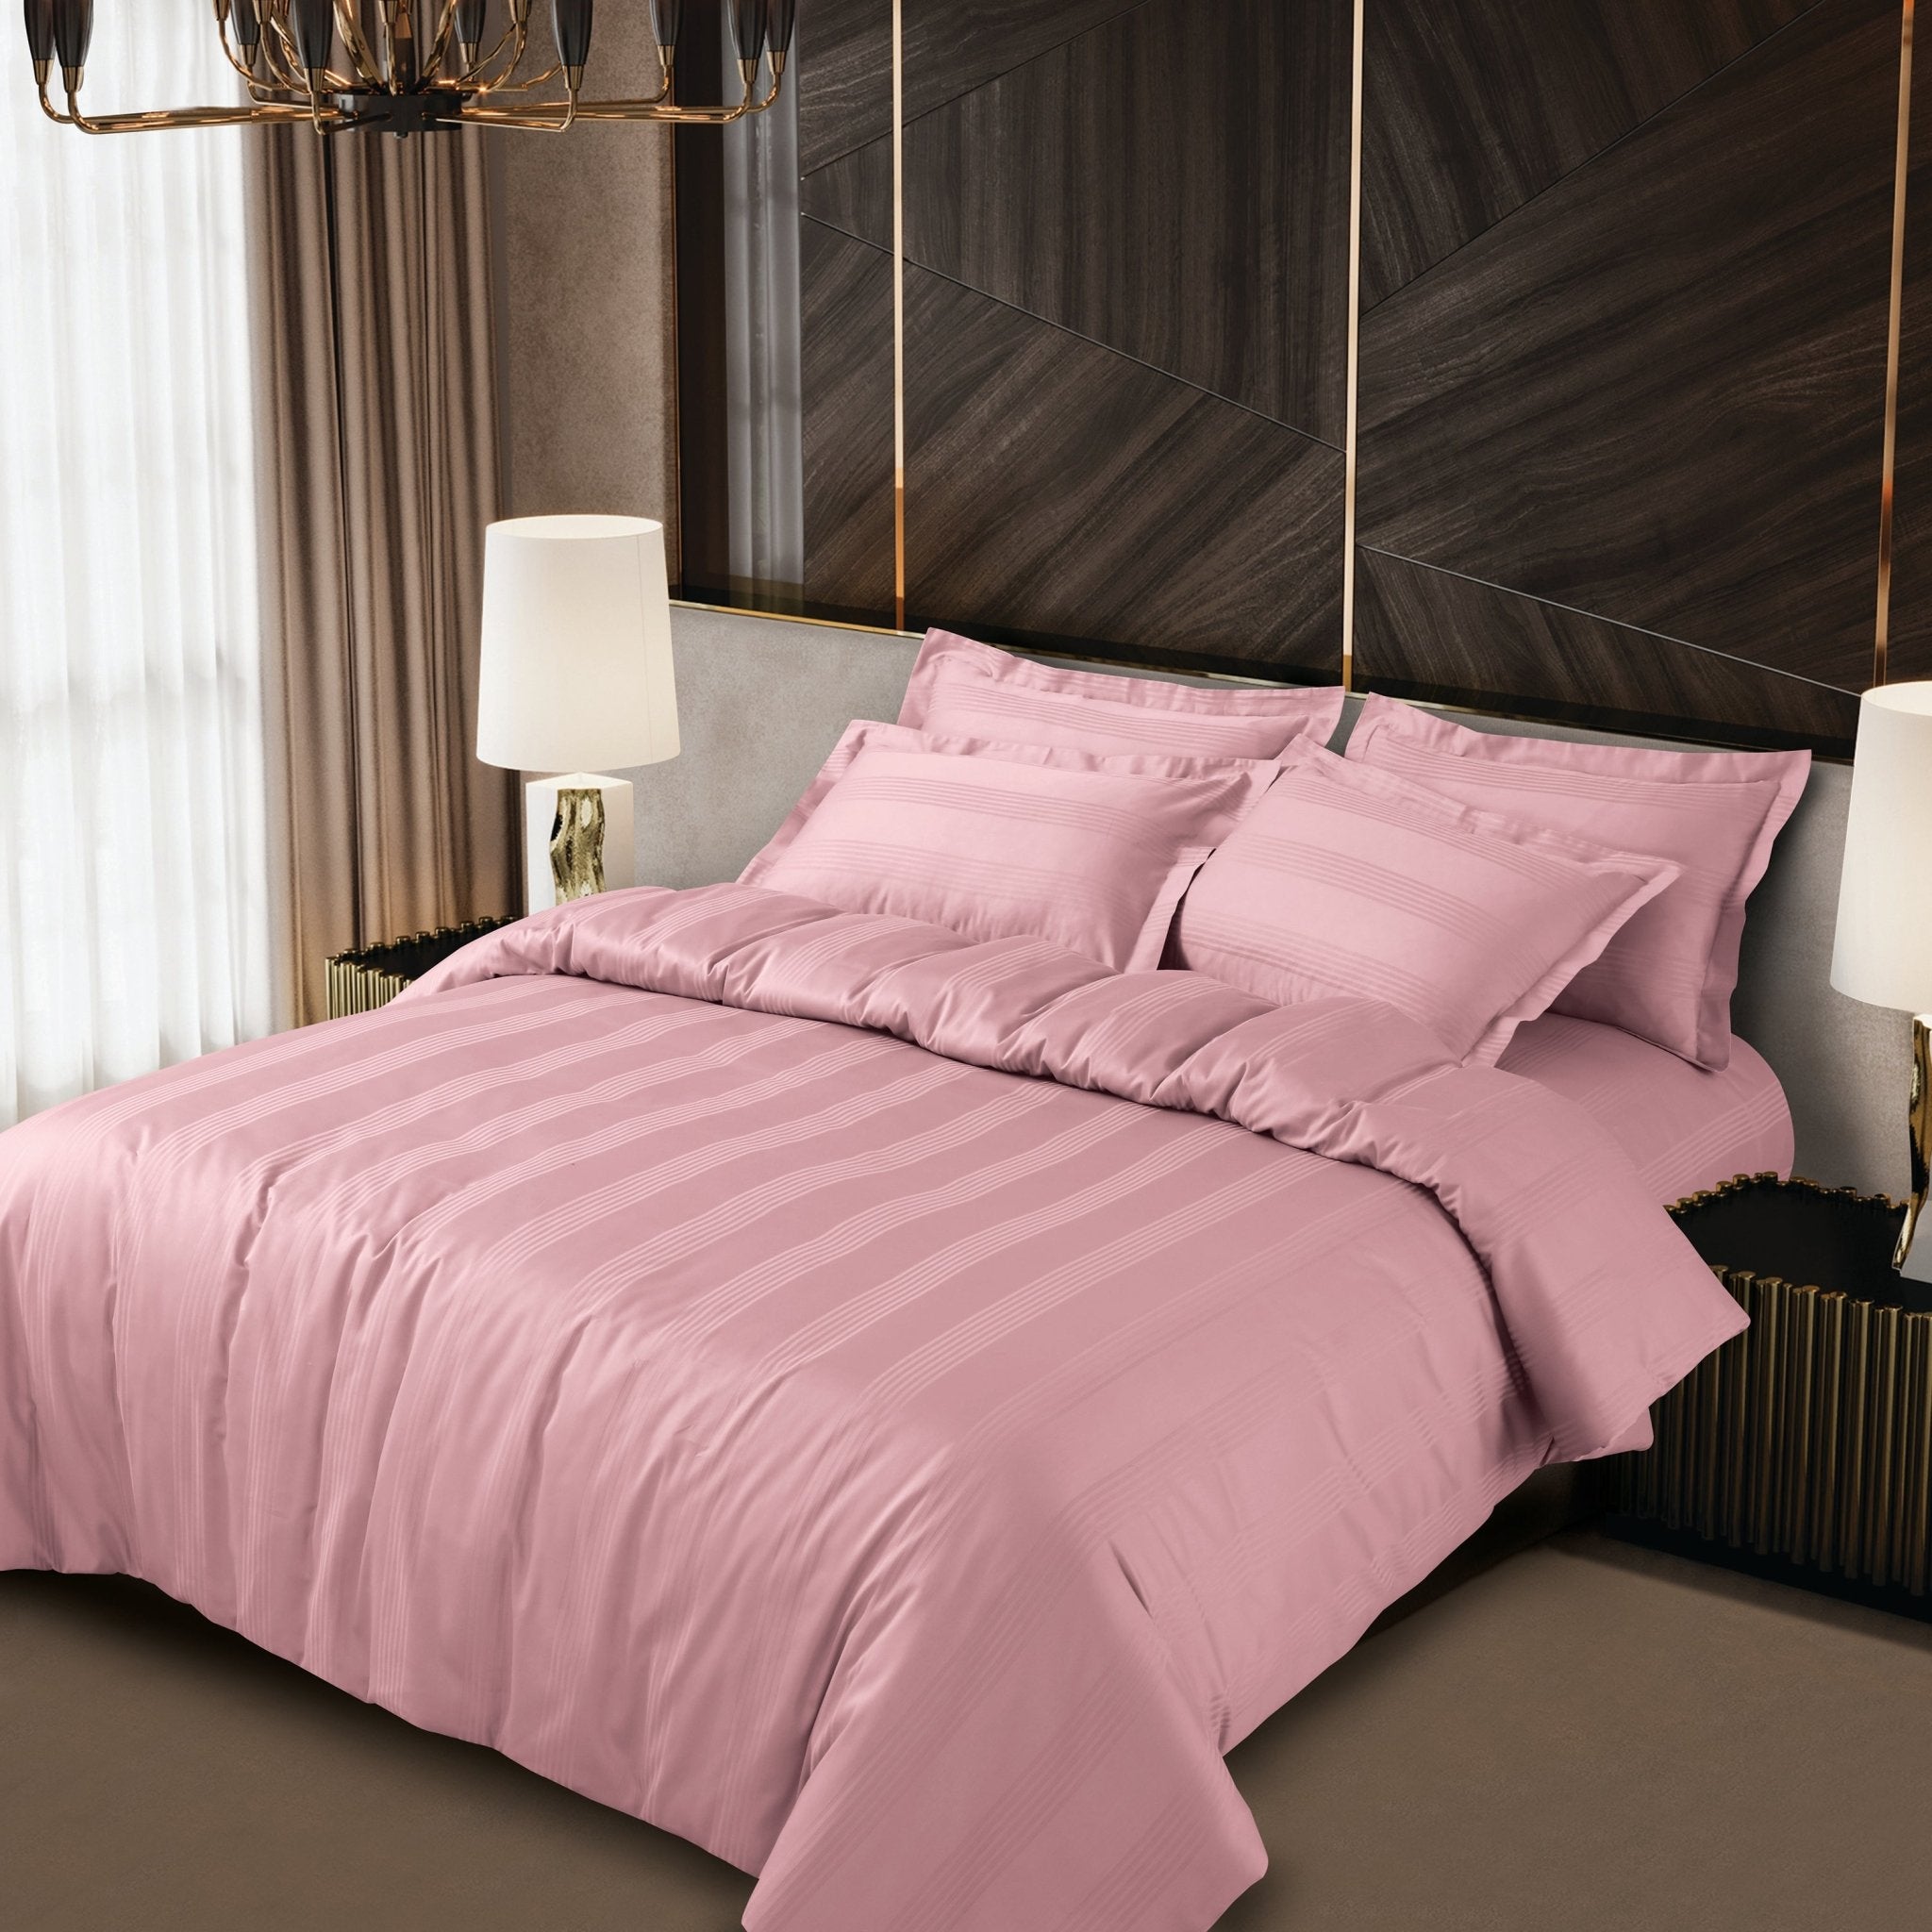 Malako Turin Jacquard Rose Pink Stripes 450 TC 100% Cotton Double Bed Duvet Cover - MALAKO